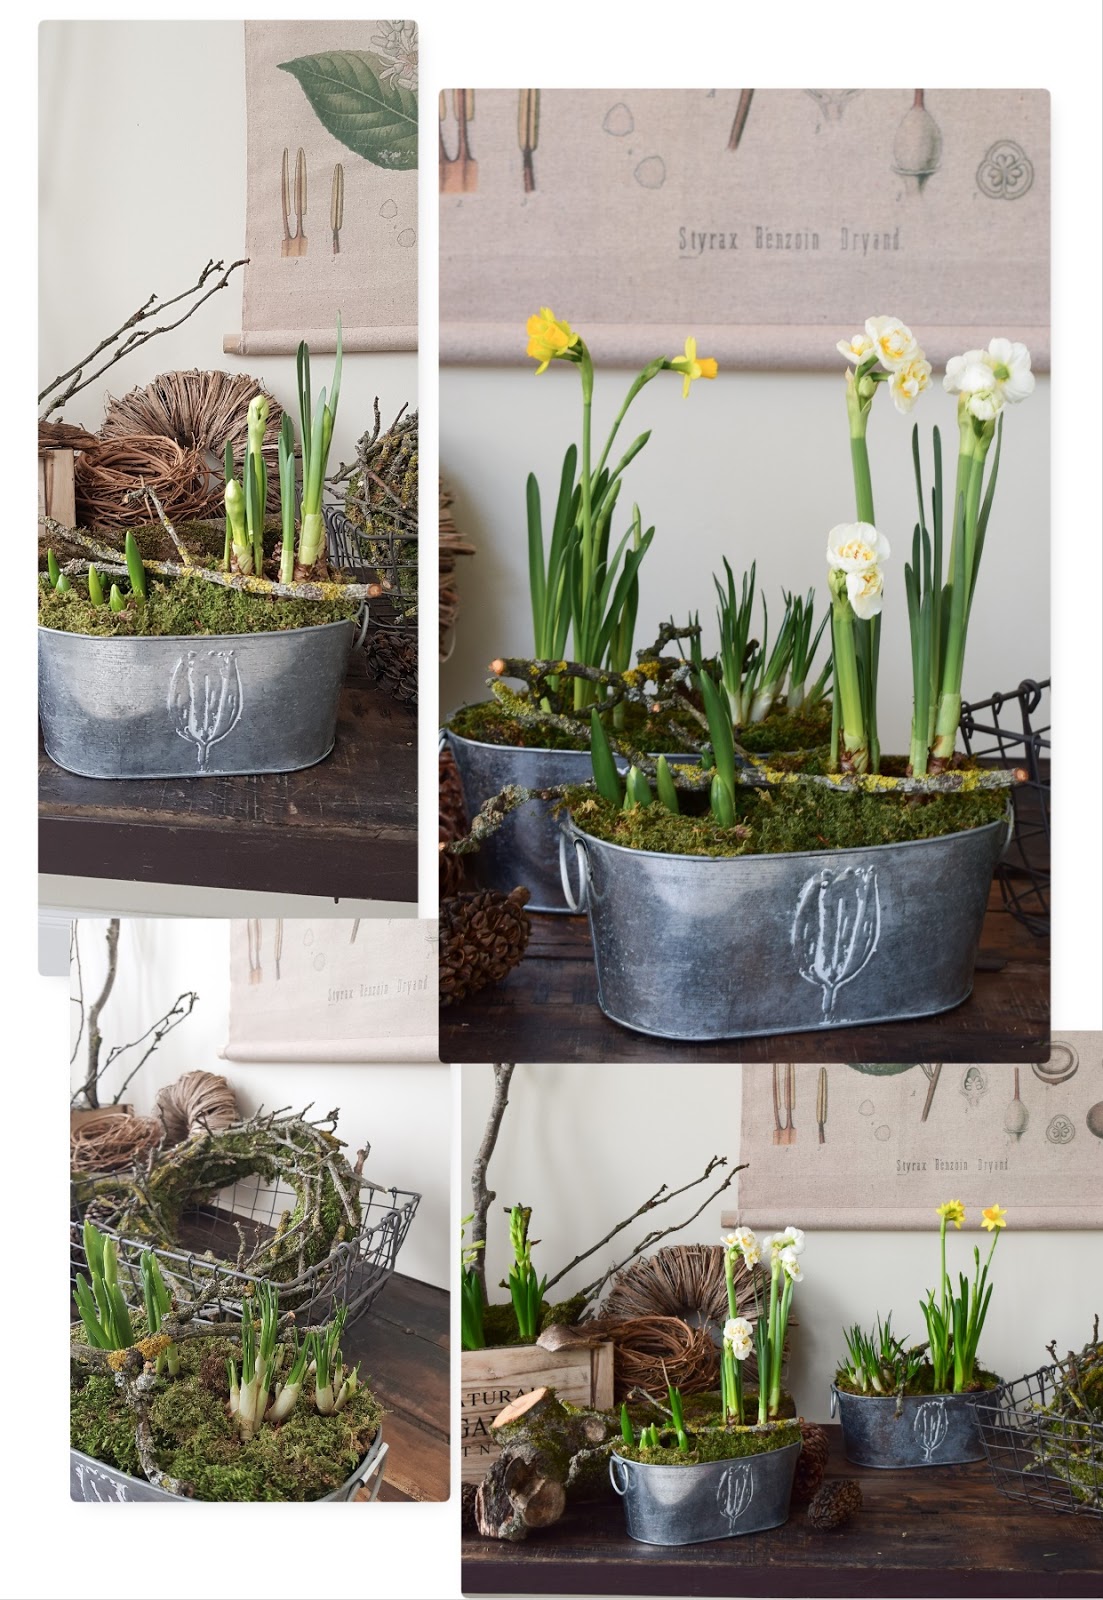 Narzisse bridal crown im Topf. Frühlingsblüher Frühlingsdeko mit Naturmaterialien Topfpflanze